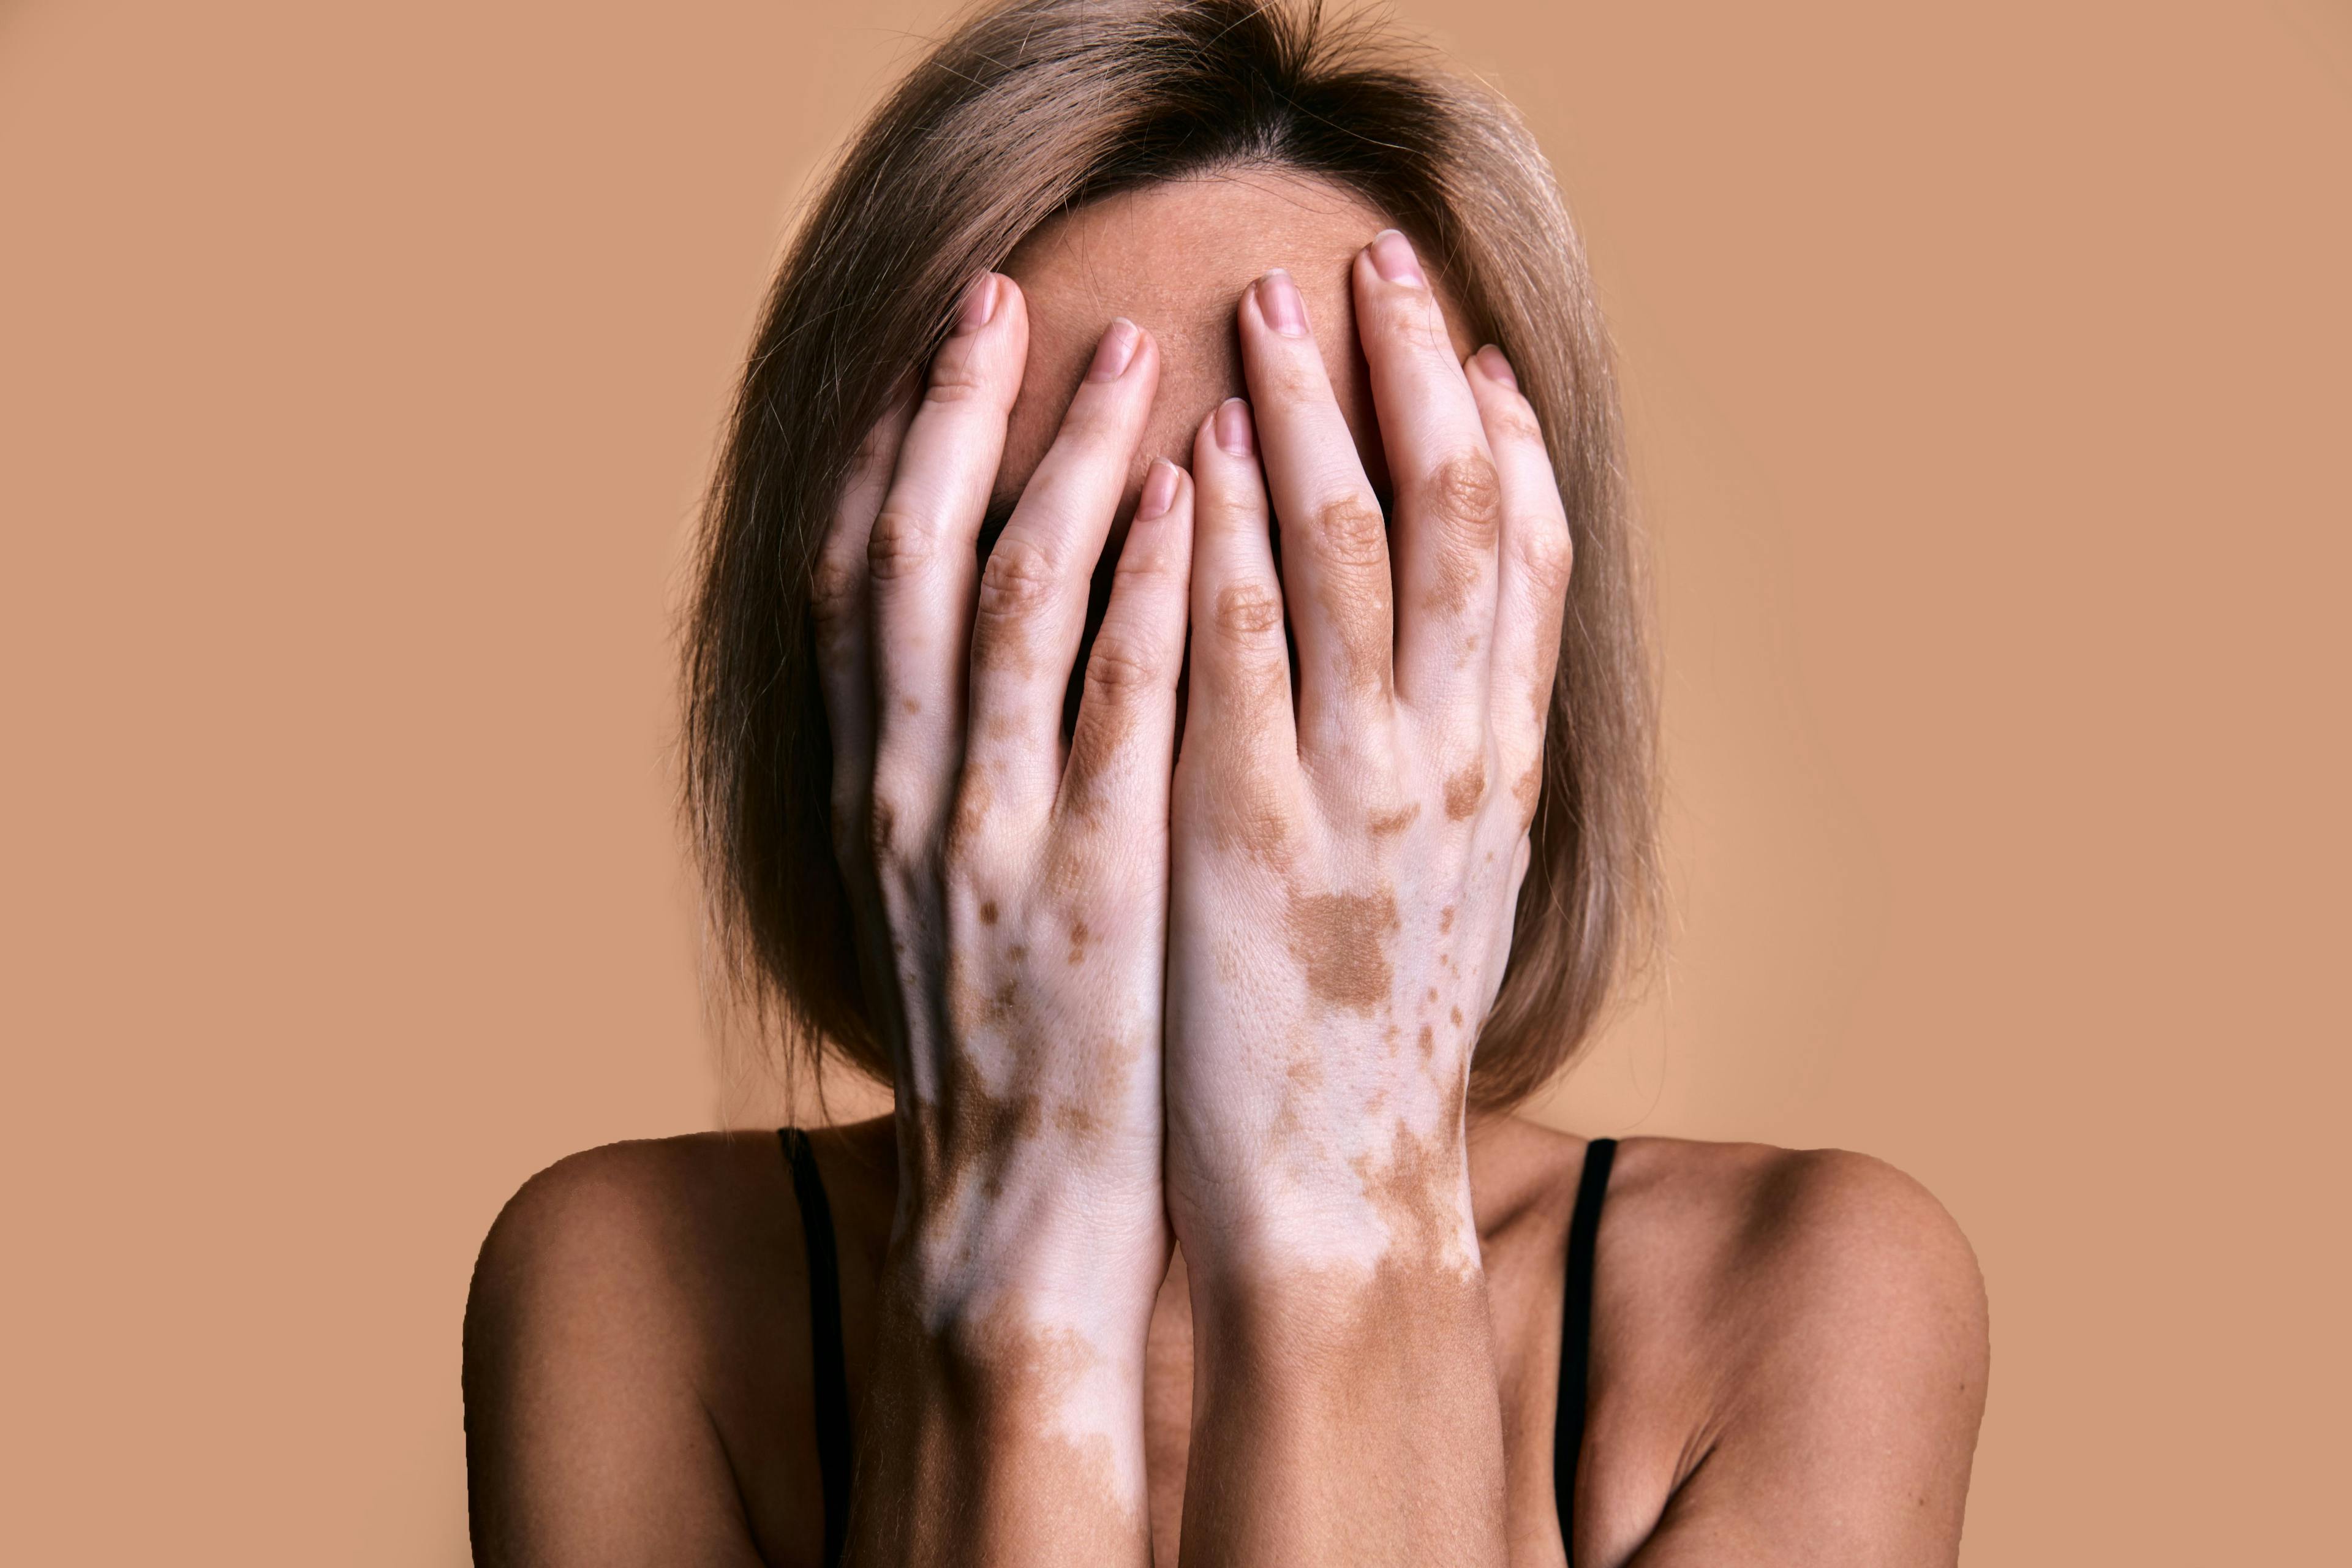 Woman with vitiligo | Image Credit: © Savory